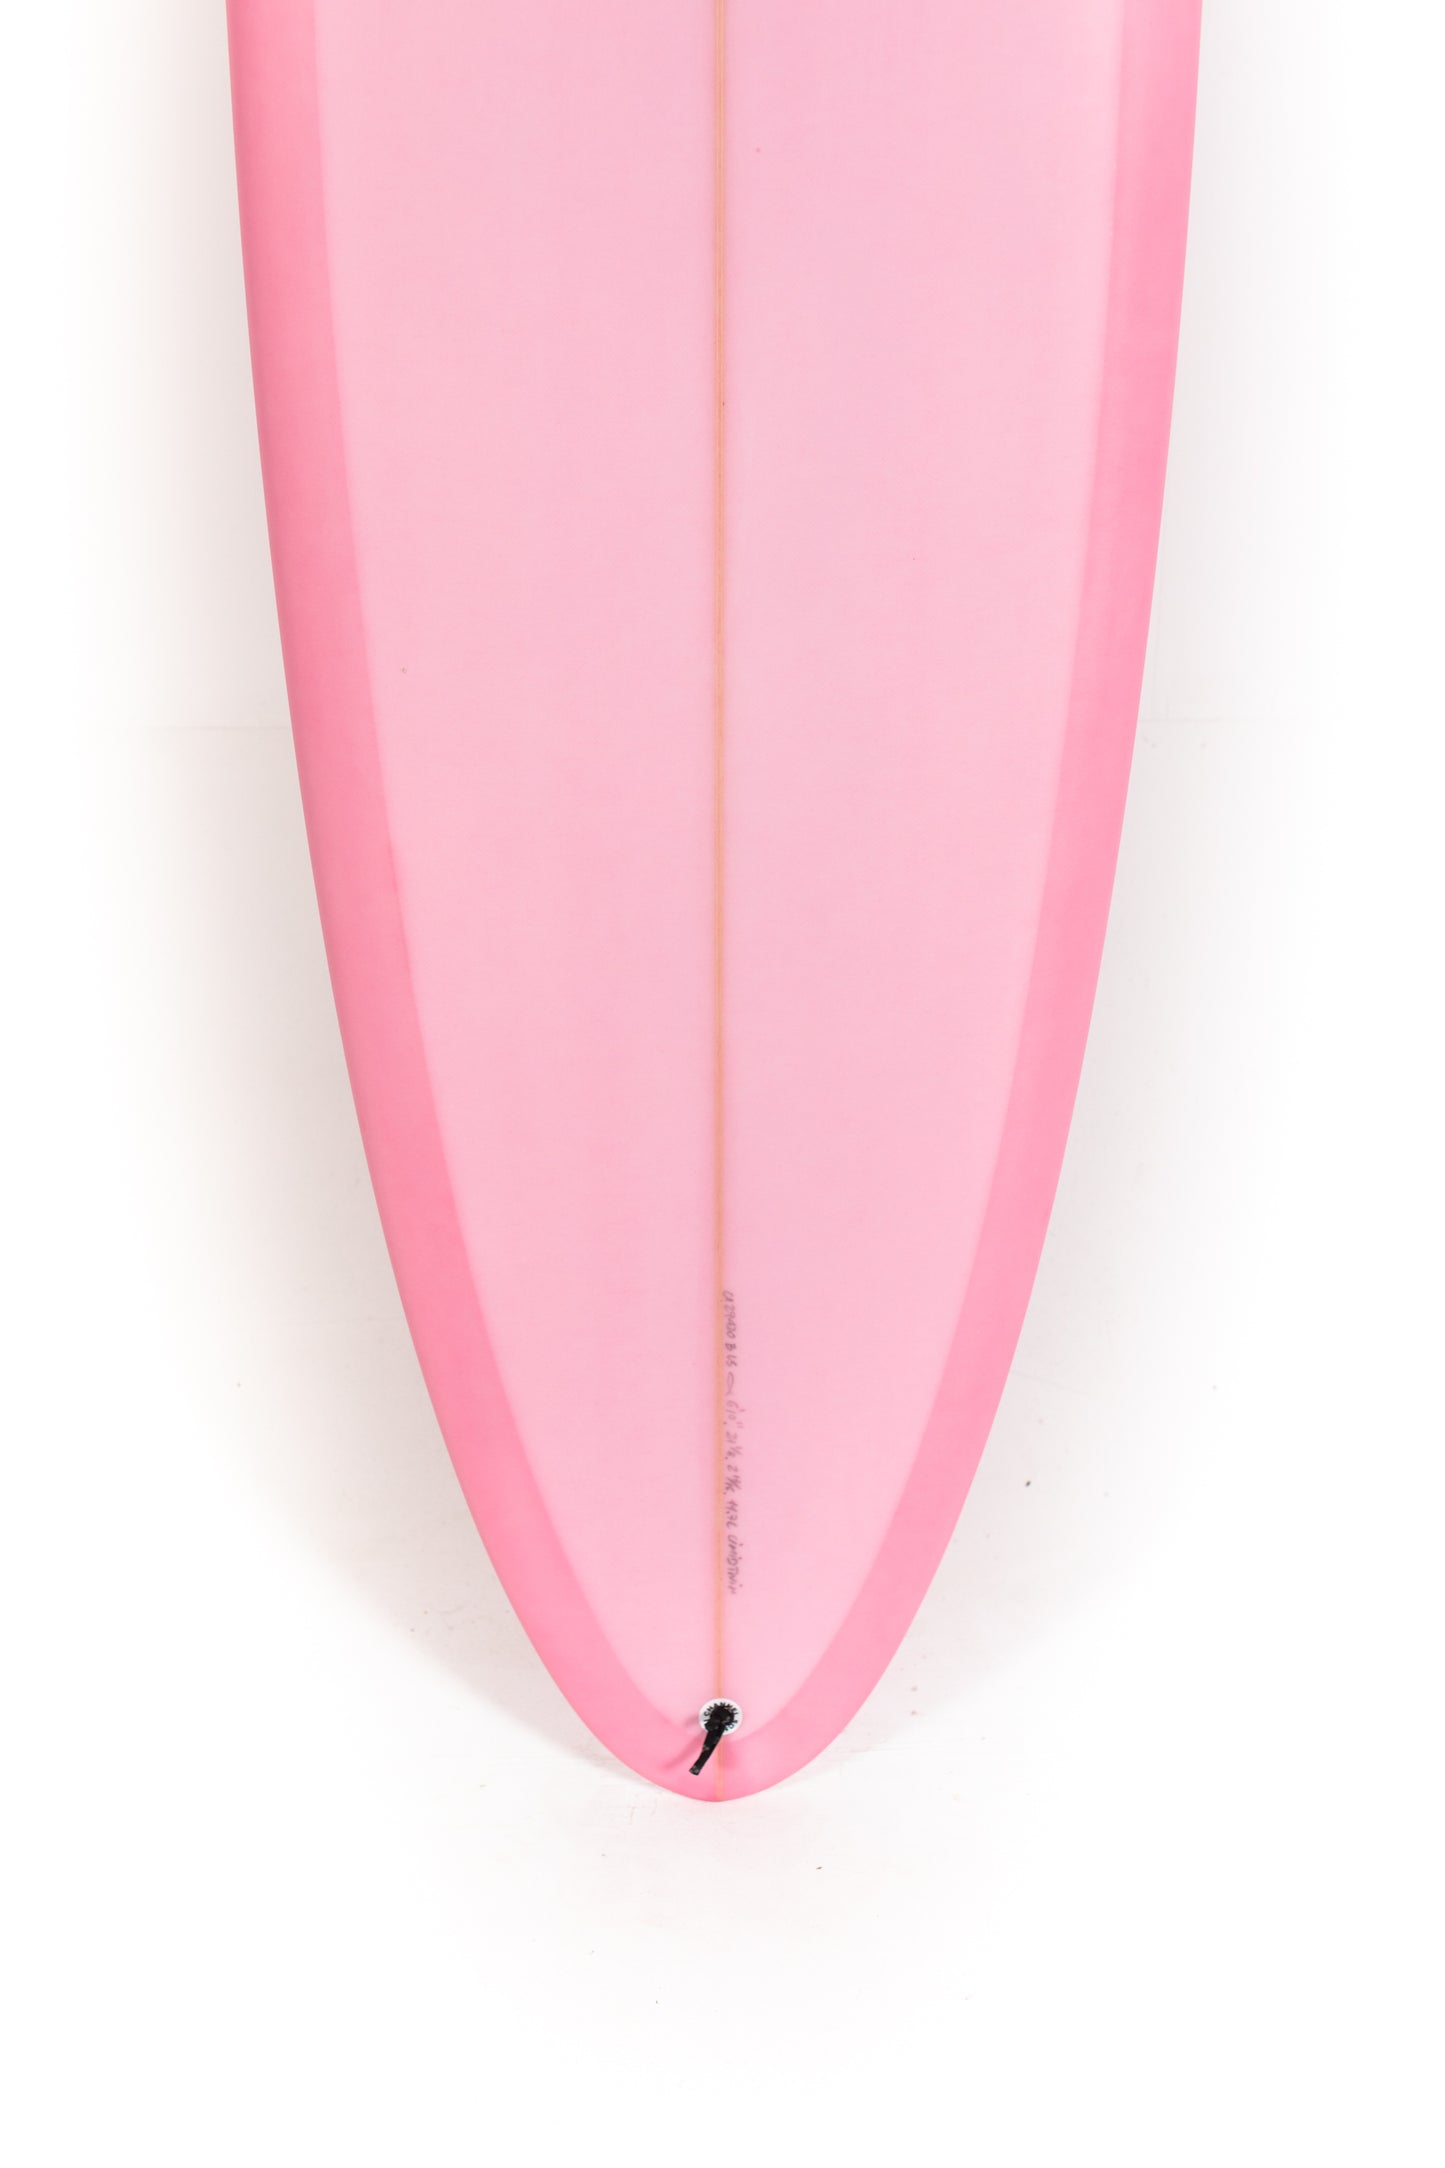 
                  
                    Pukas-Surf-Shop-Christenson-Surfboards-CI-Mid-Twin-Al-Merrick-6_1
                  
                